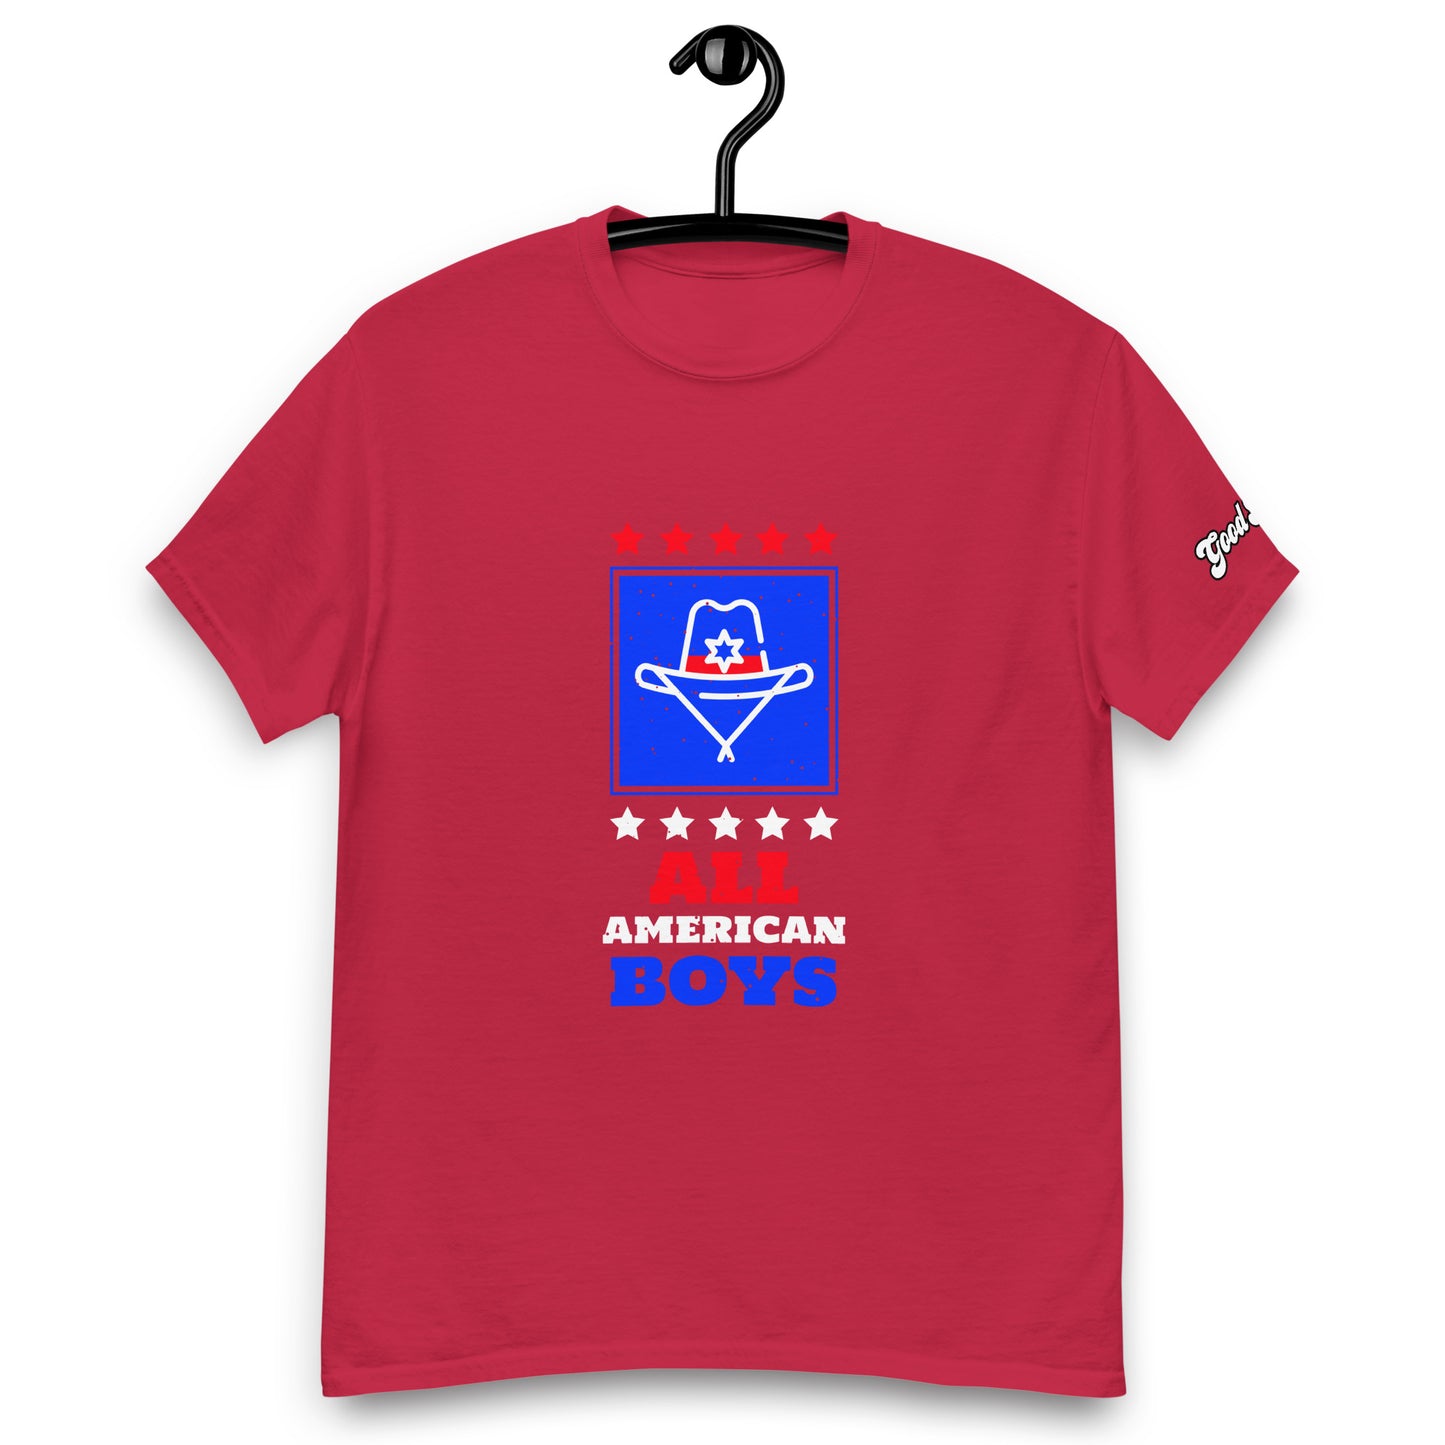 All American Boys T-Shirt